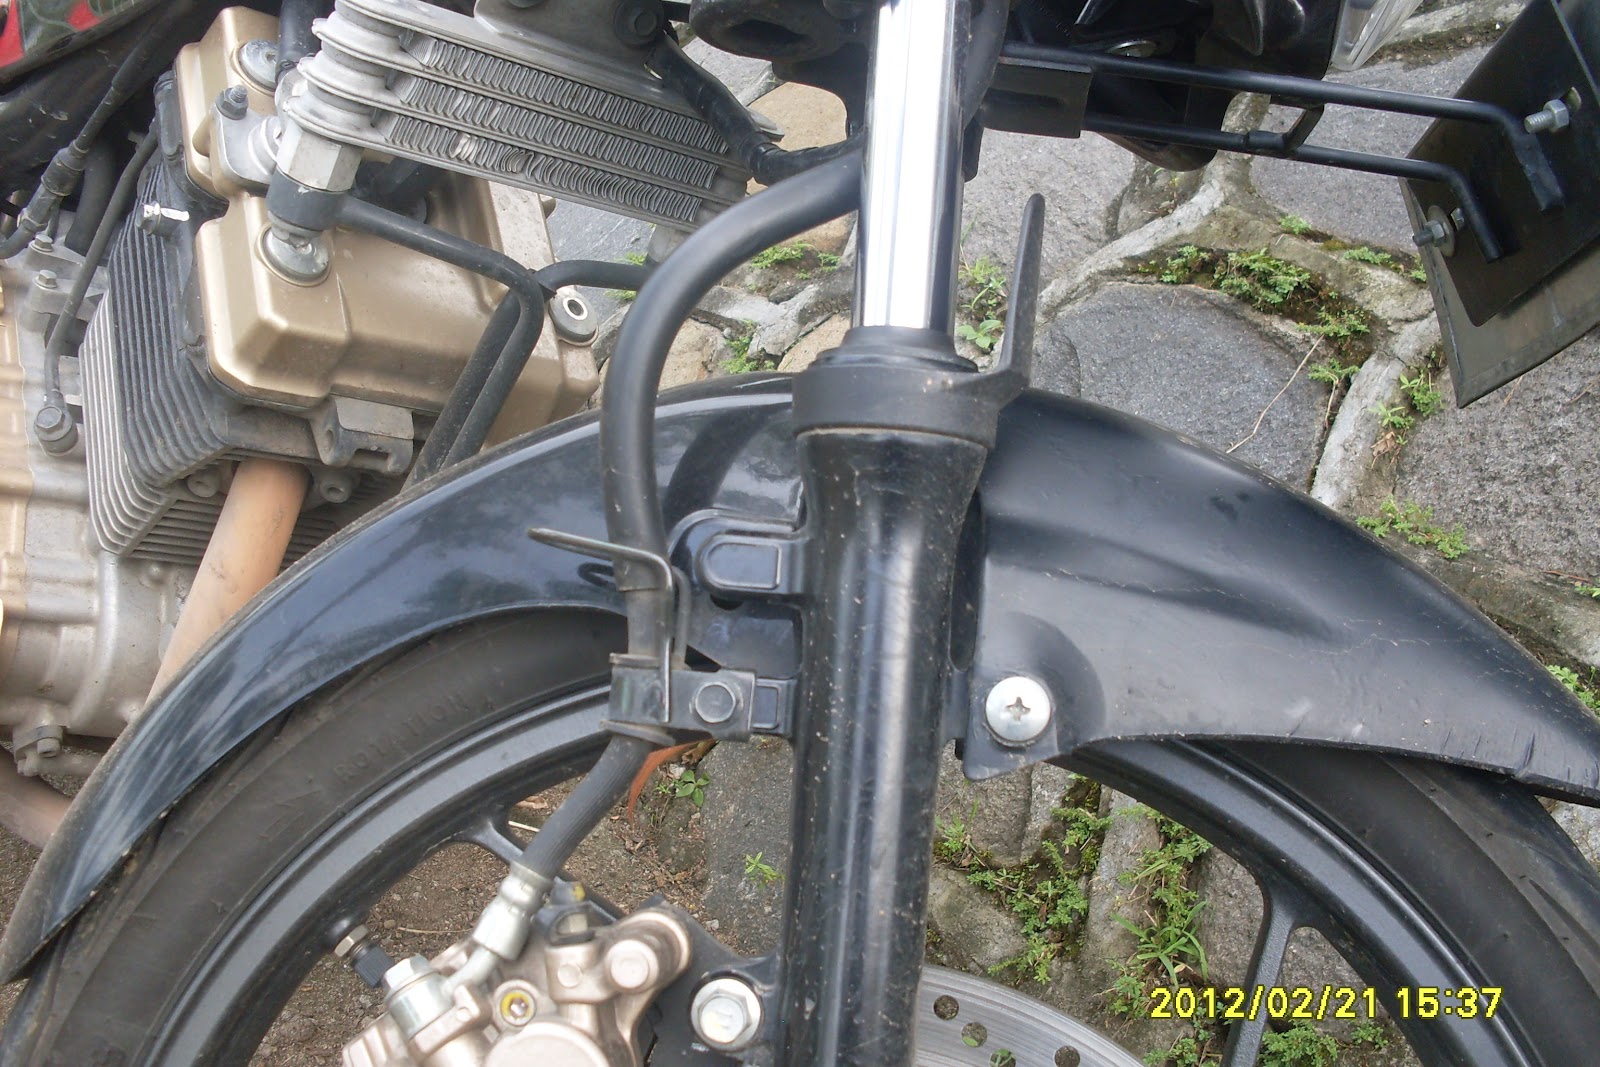  Harga  shock  breaker depan  satria fu motorcycle part